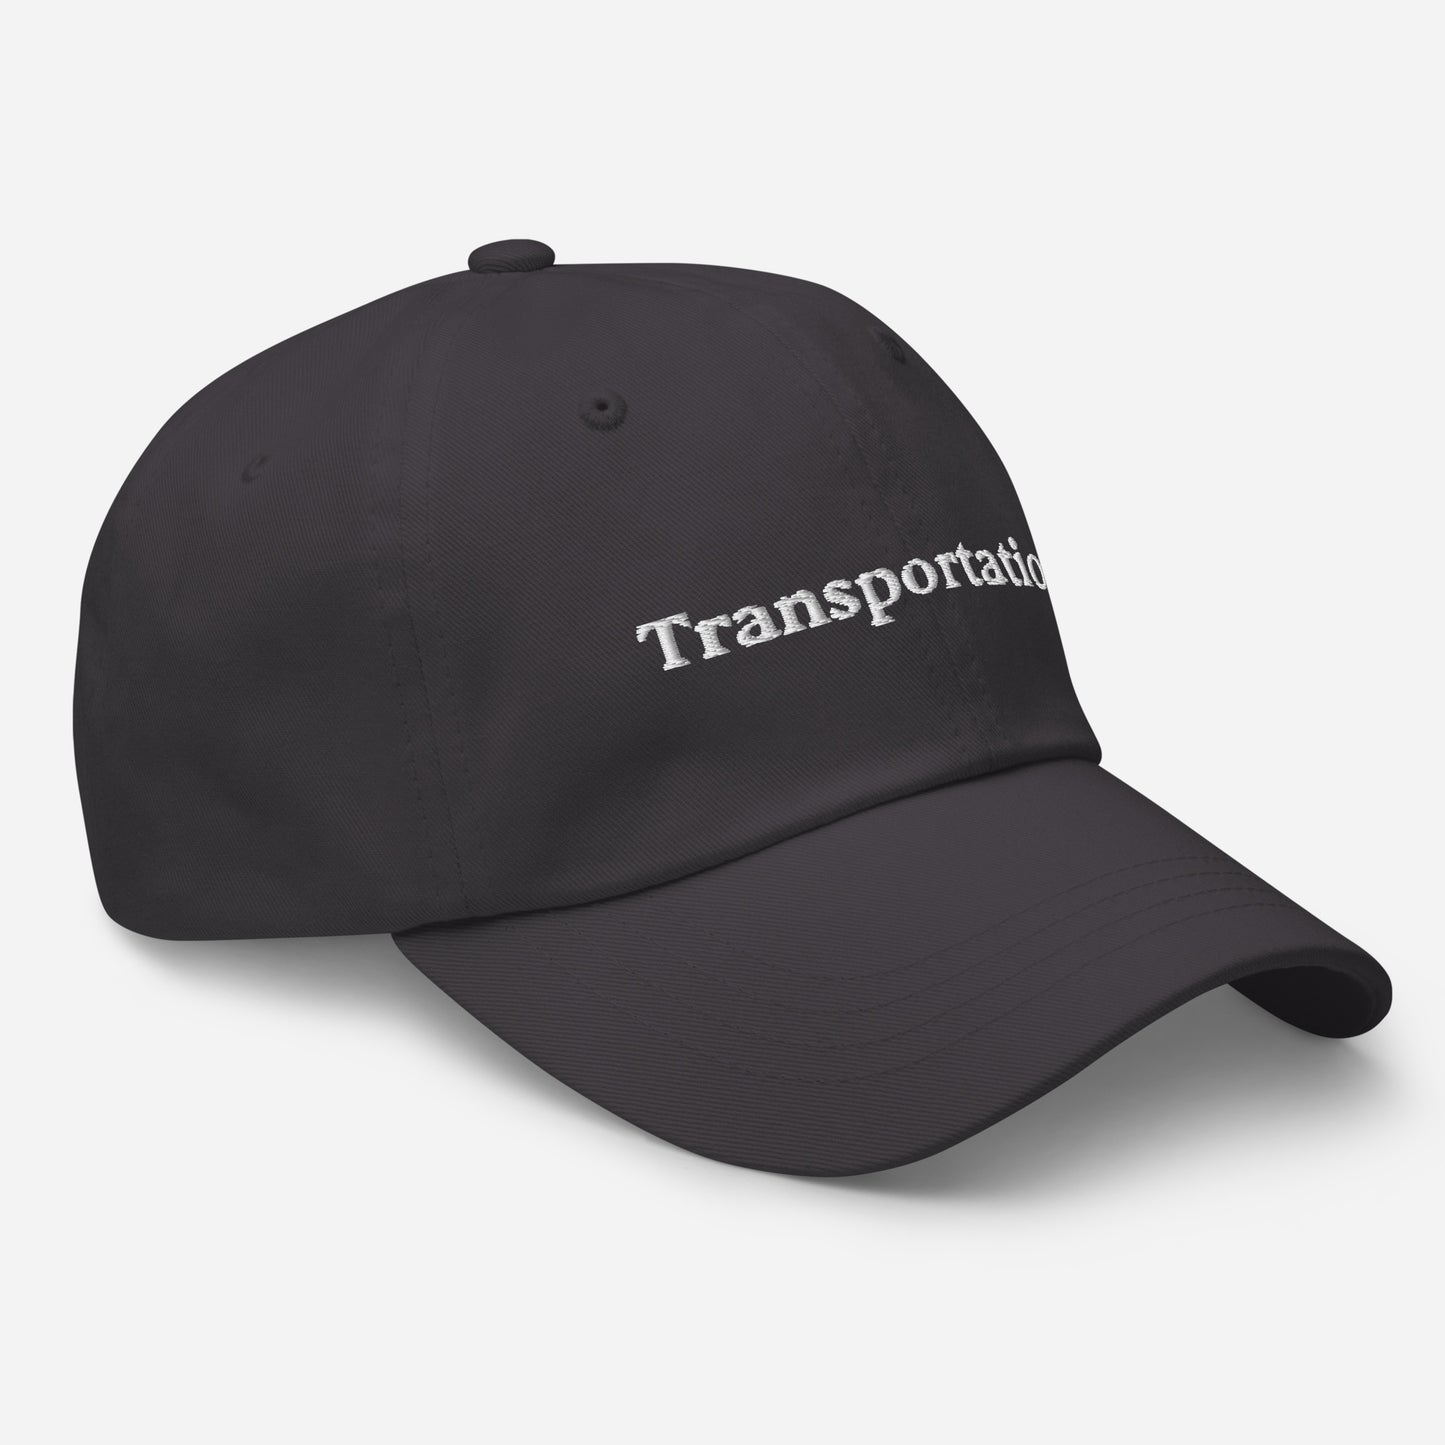 Transportation Hat